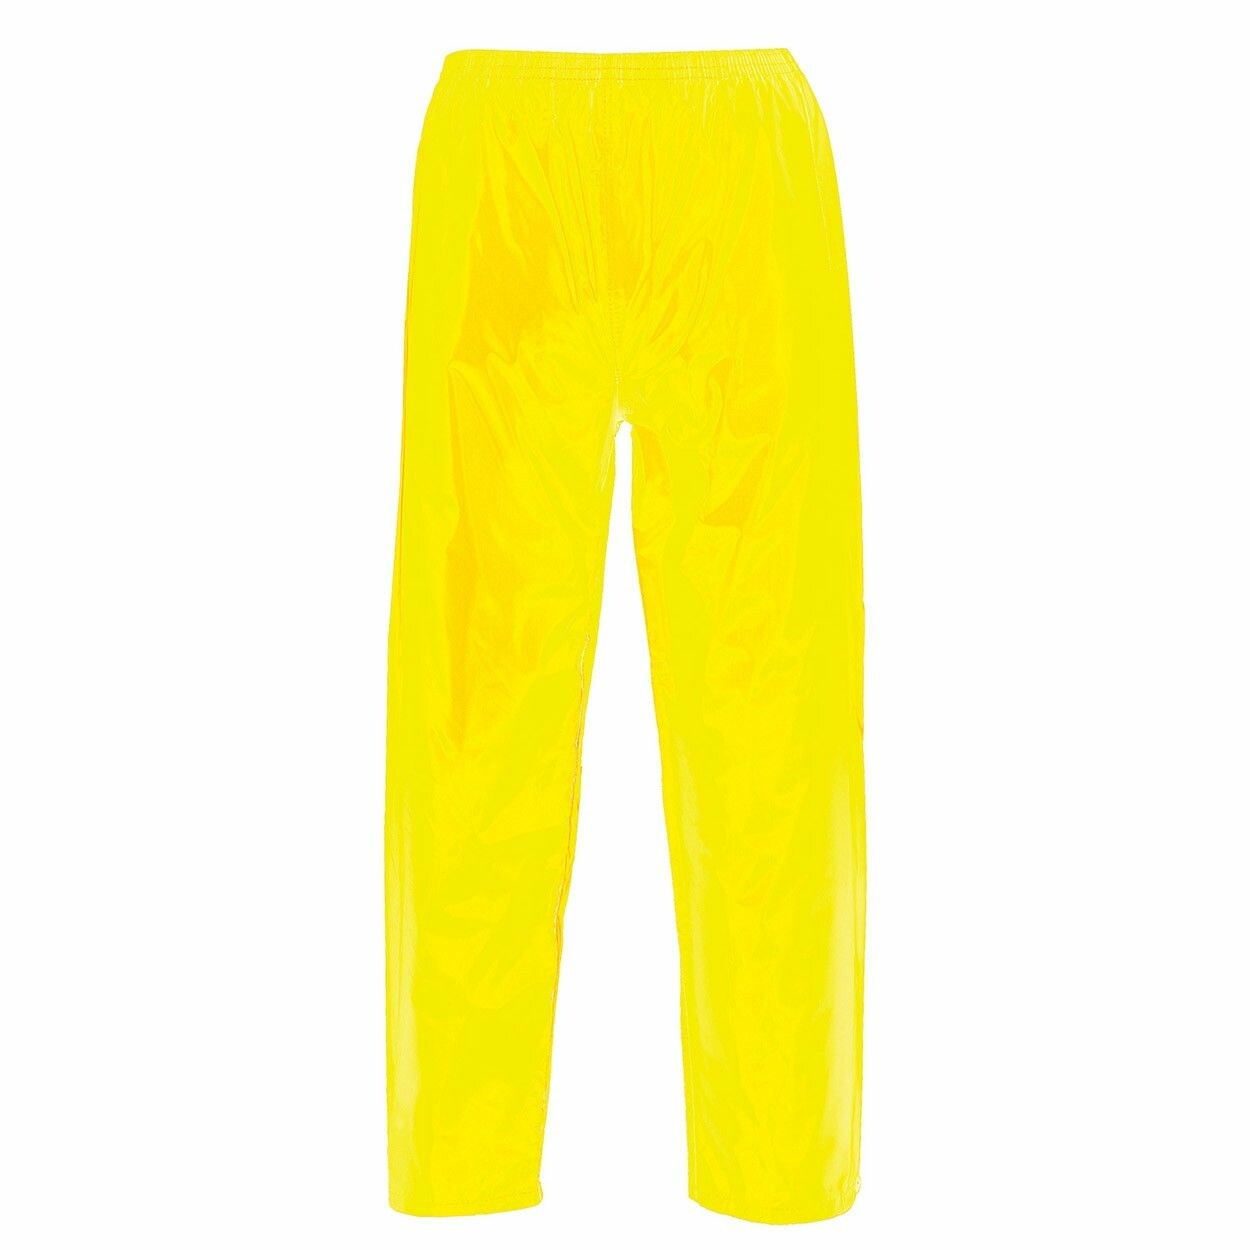 Nohavice do dažďa S441 žltá 4XL